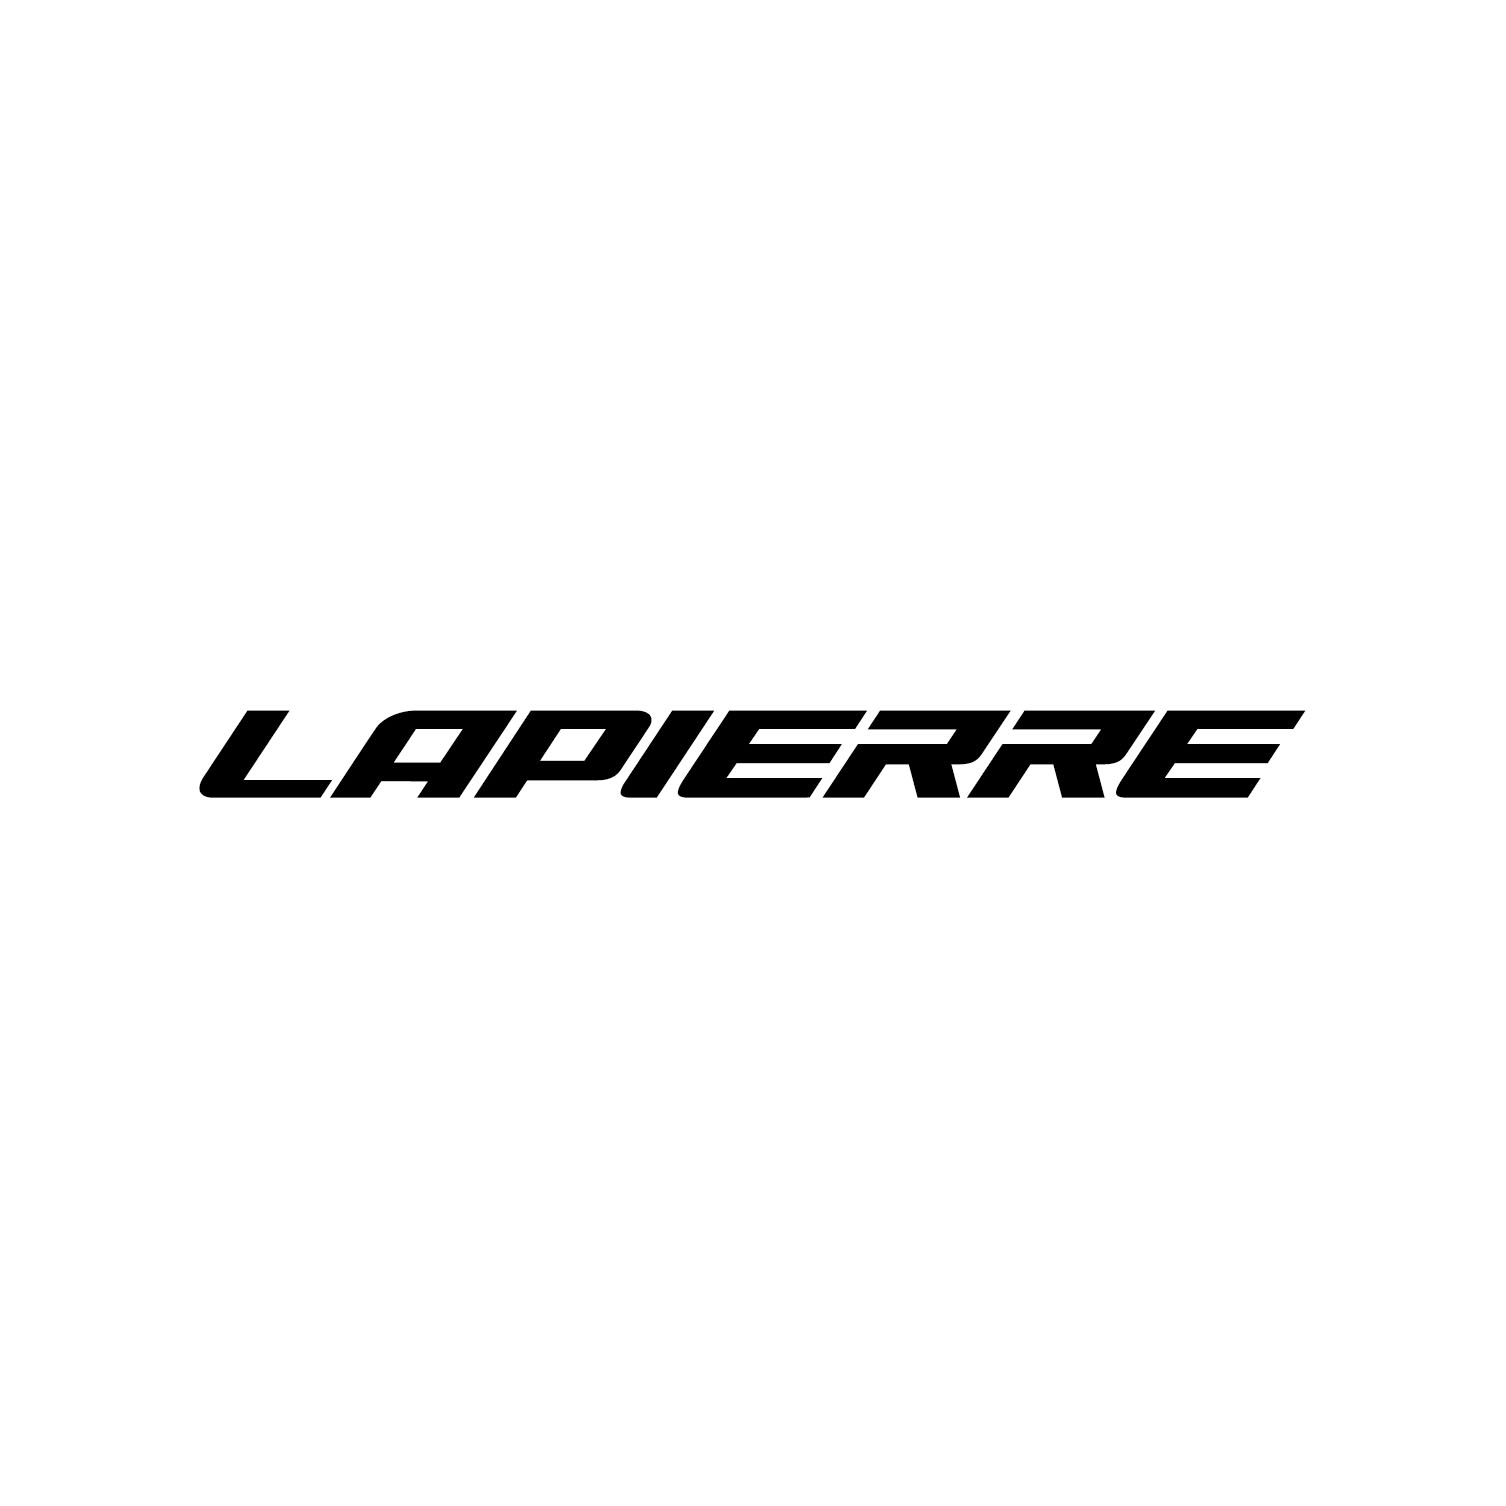 LAPIERRE (ラピエール)LOGO Image